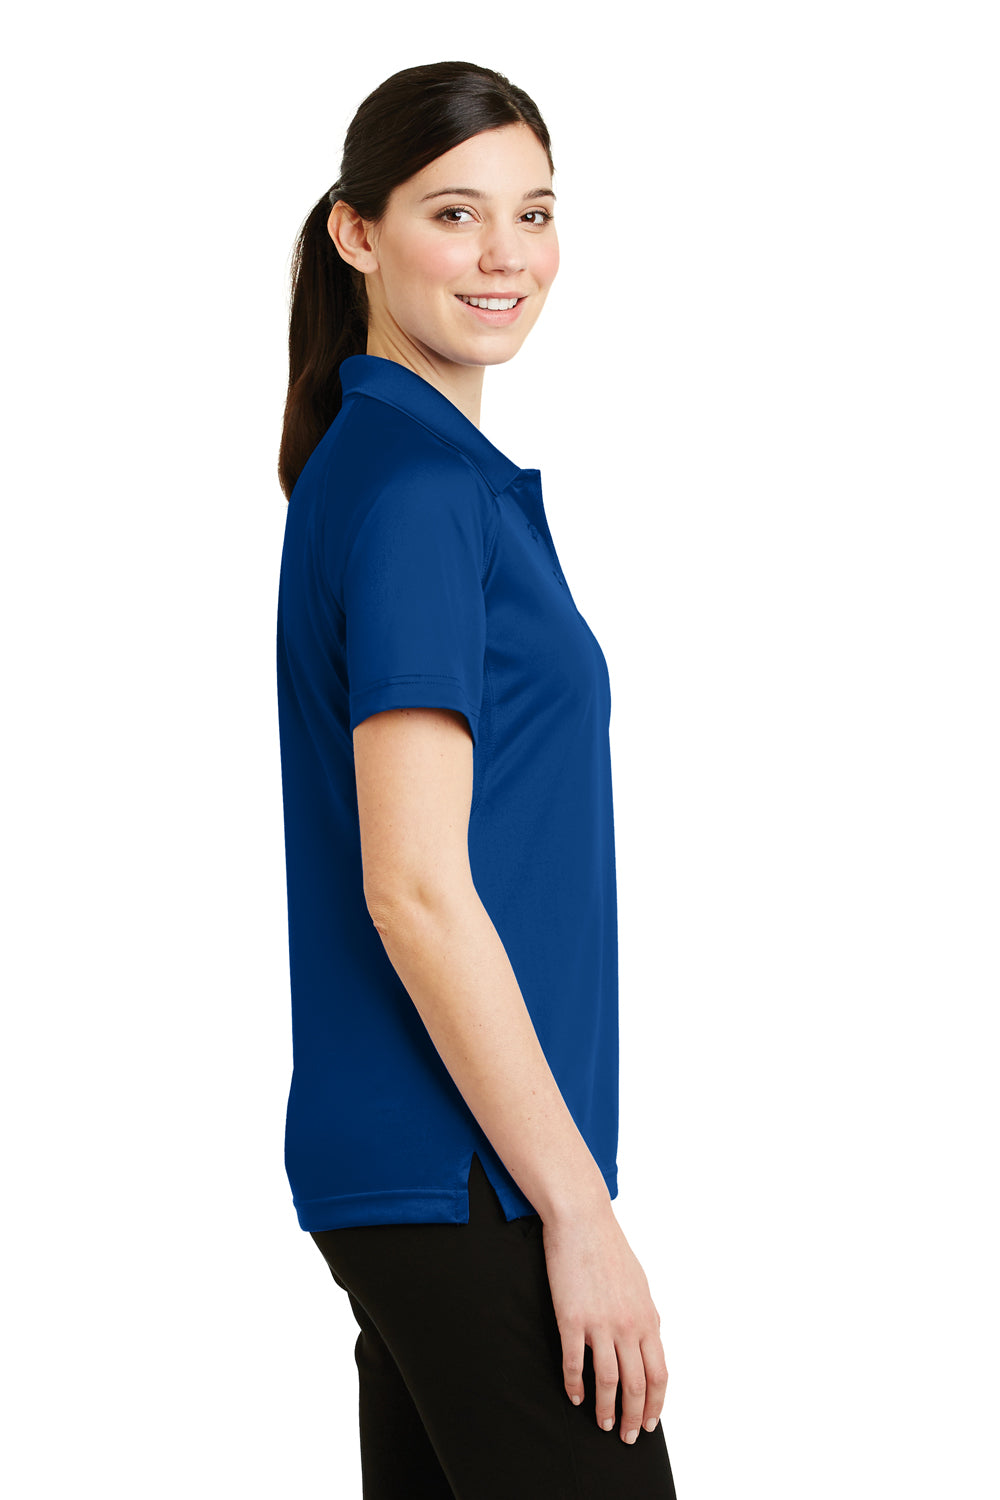 CornerStone CS411 Womens Select Tactical Moisture Wicking Short Sleeve Polo Shirt Royal Blue Side